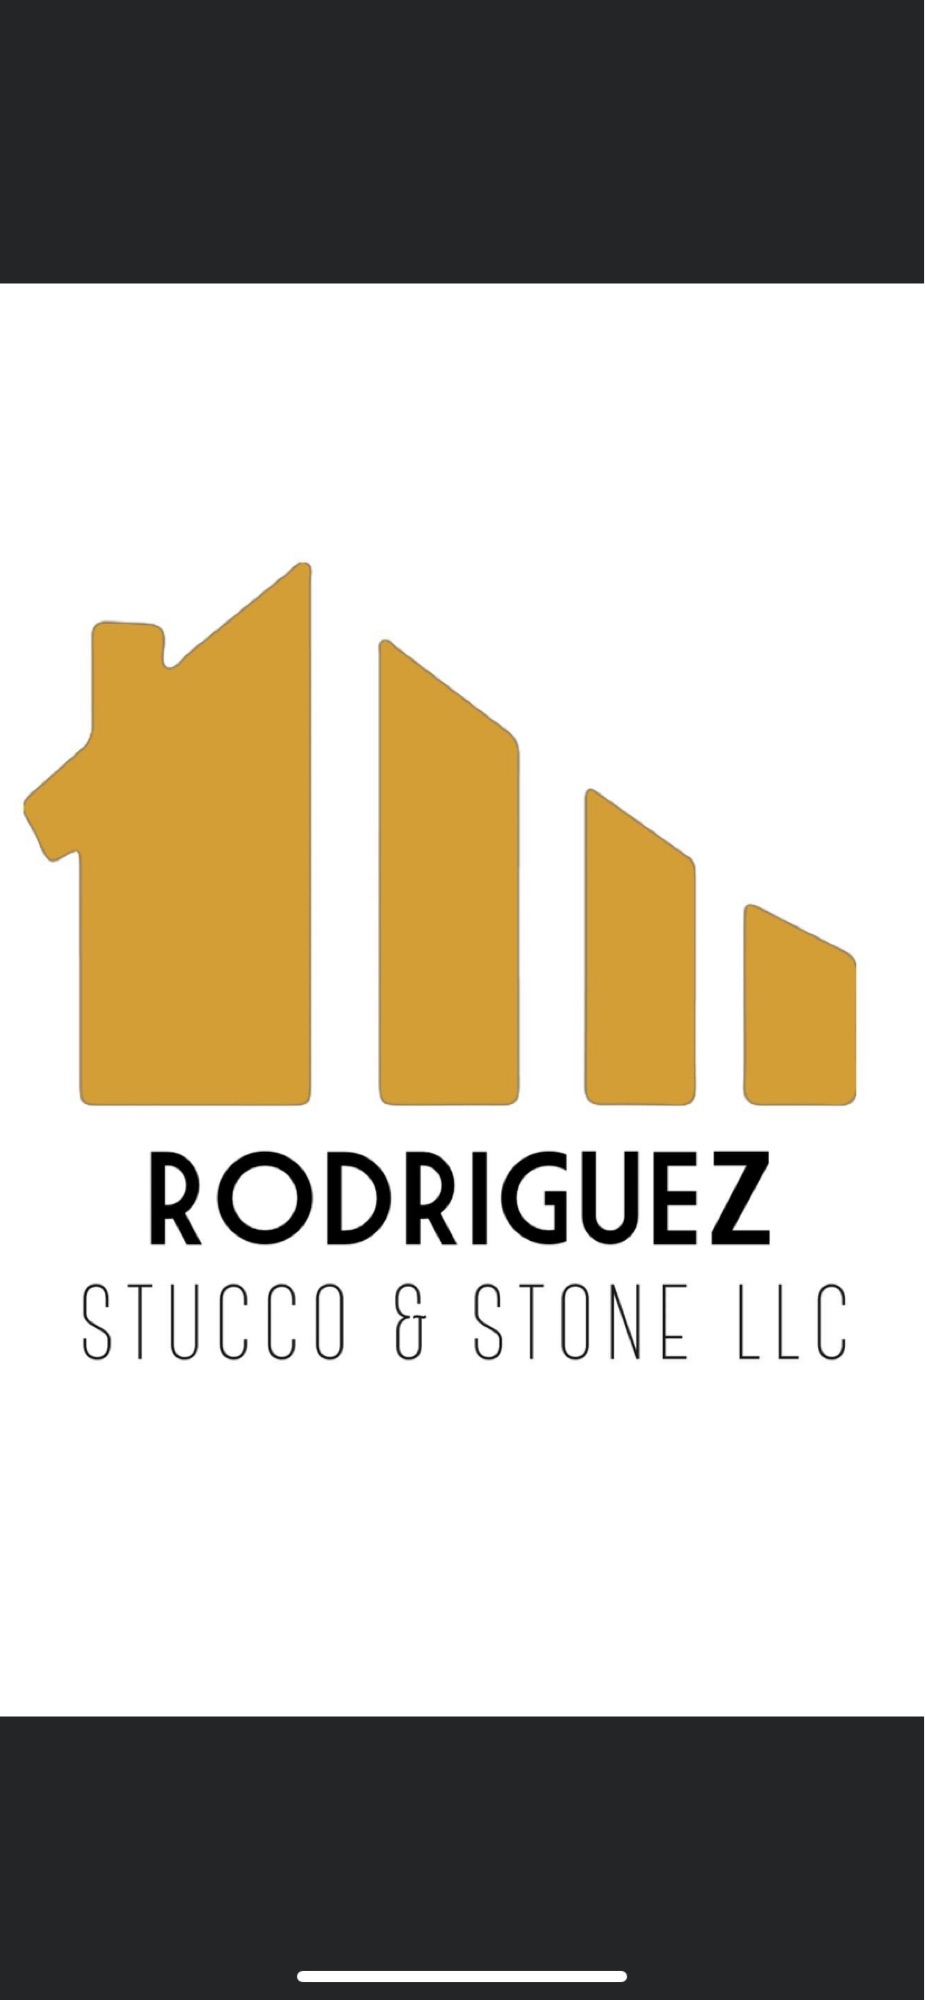 Rodriguez Stucco & Stone, LLC Logo